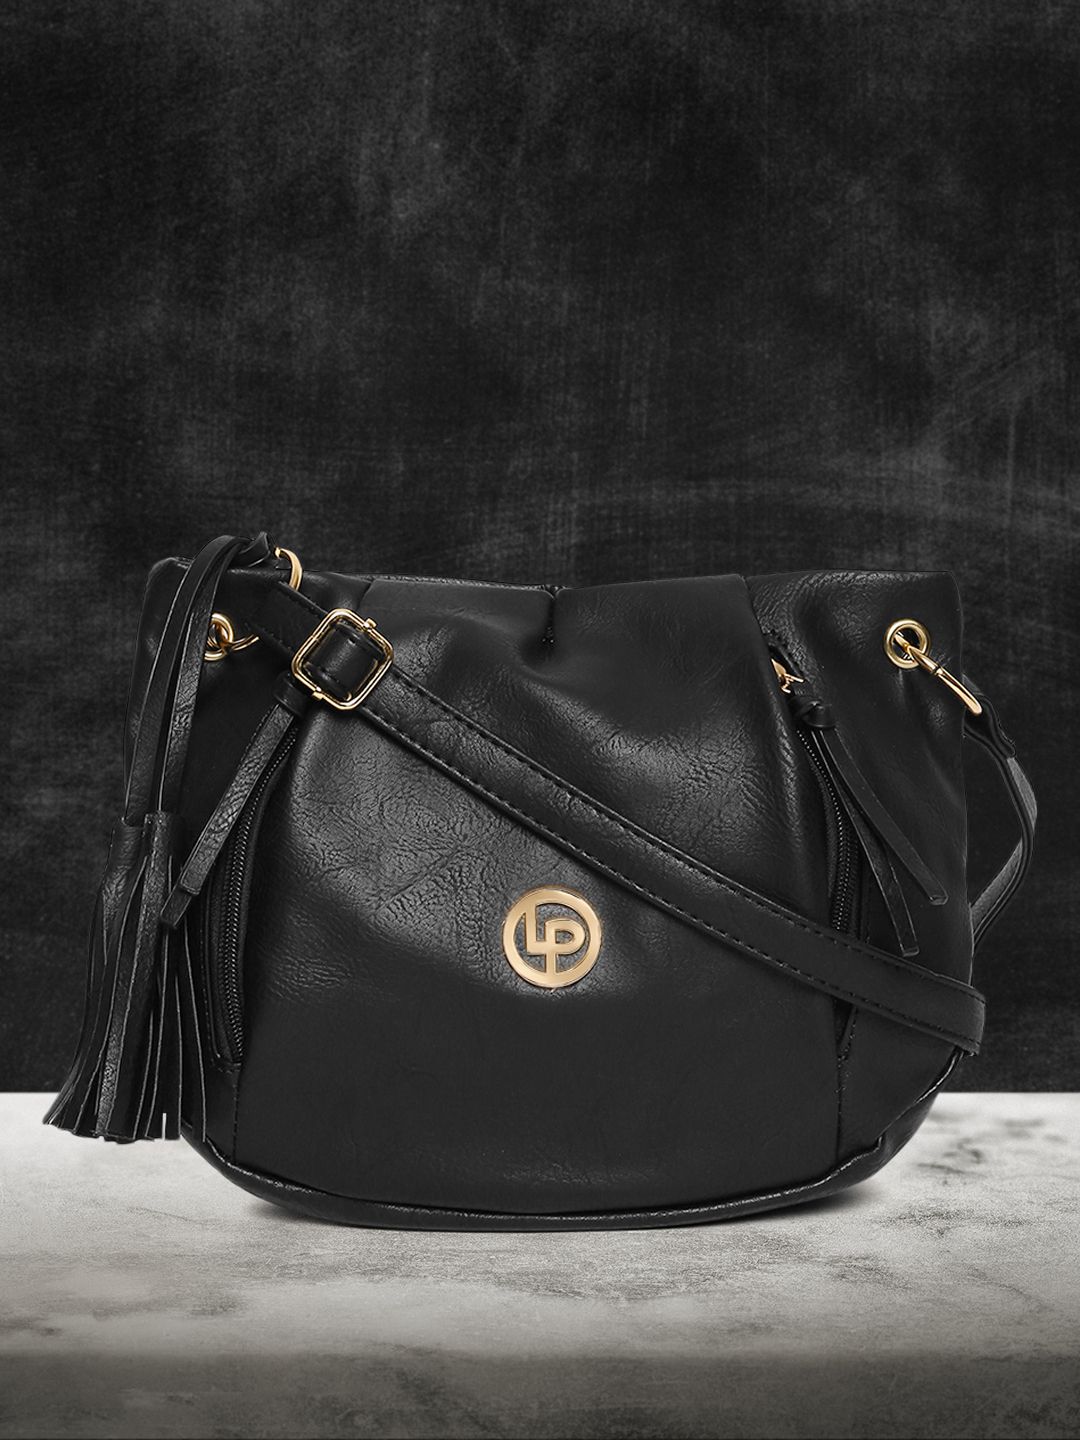 Lino Perros Black Solid Sling Bag Price in India